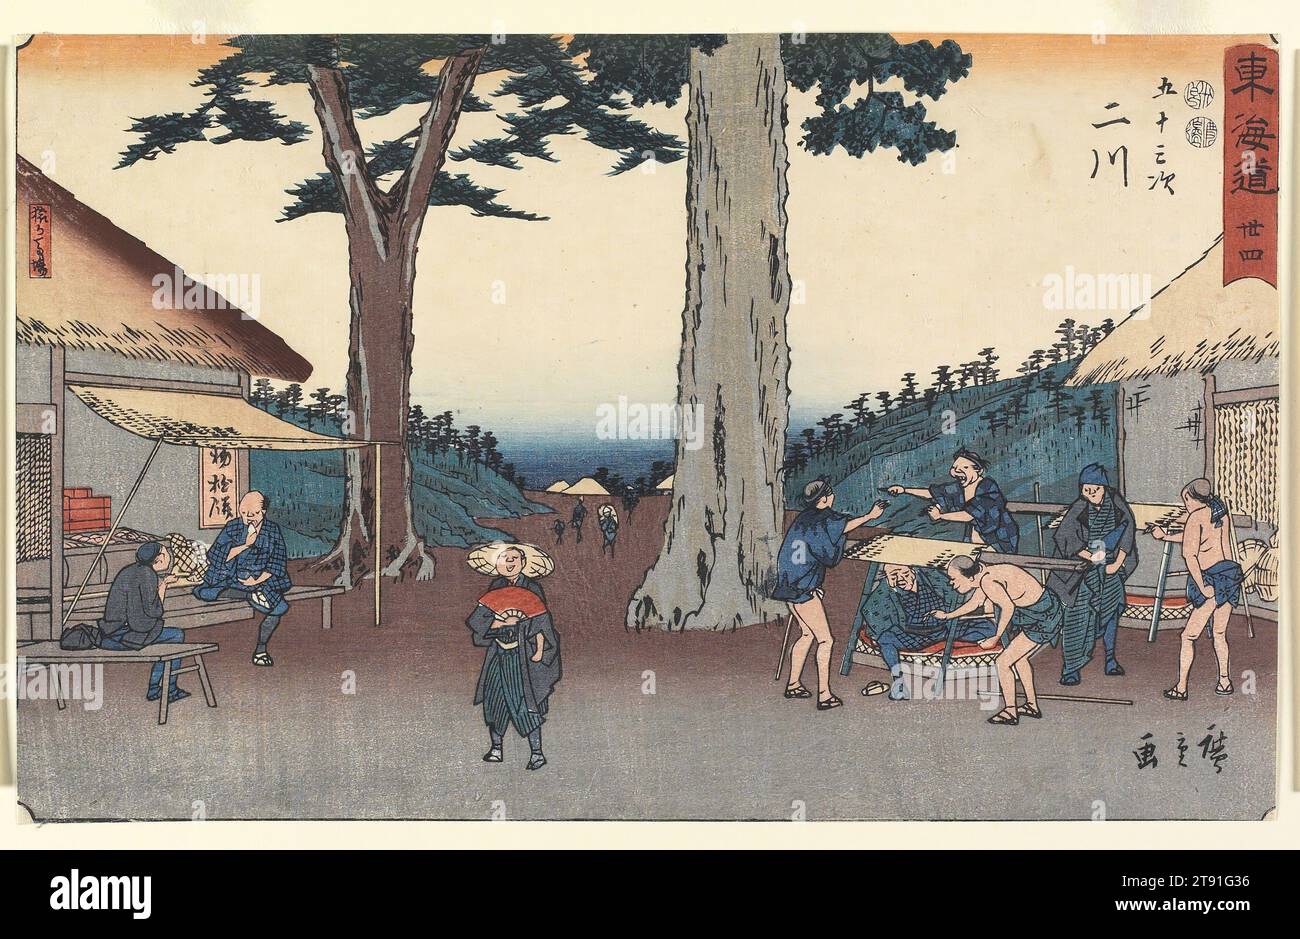 No.34 Futakawa, 1837-1844, Utagawa Hiroshige; Publisher: Maruya Seijirō, Japanese, 1797 - 1858, 8 1/2 x 13 7/16 in. (21.6 x 34.2 cm) (image)8 1/2 x 13 7/16 in. (21.6 x 34.2 cm) (sheet), Woodblock print (nishiki-e); ink and color on paper, Japan, 19th century Stock Photo